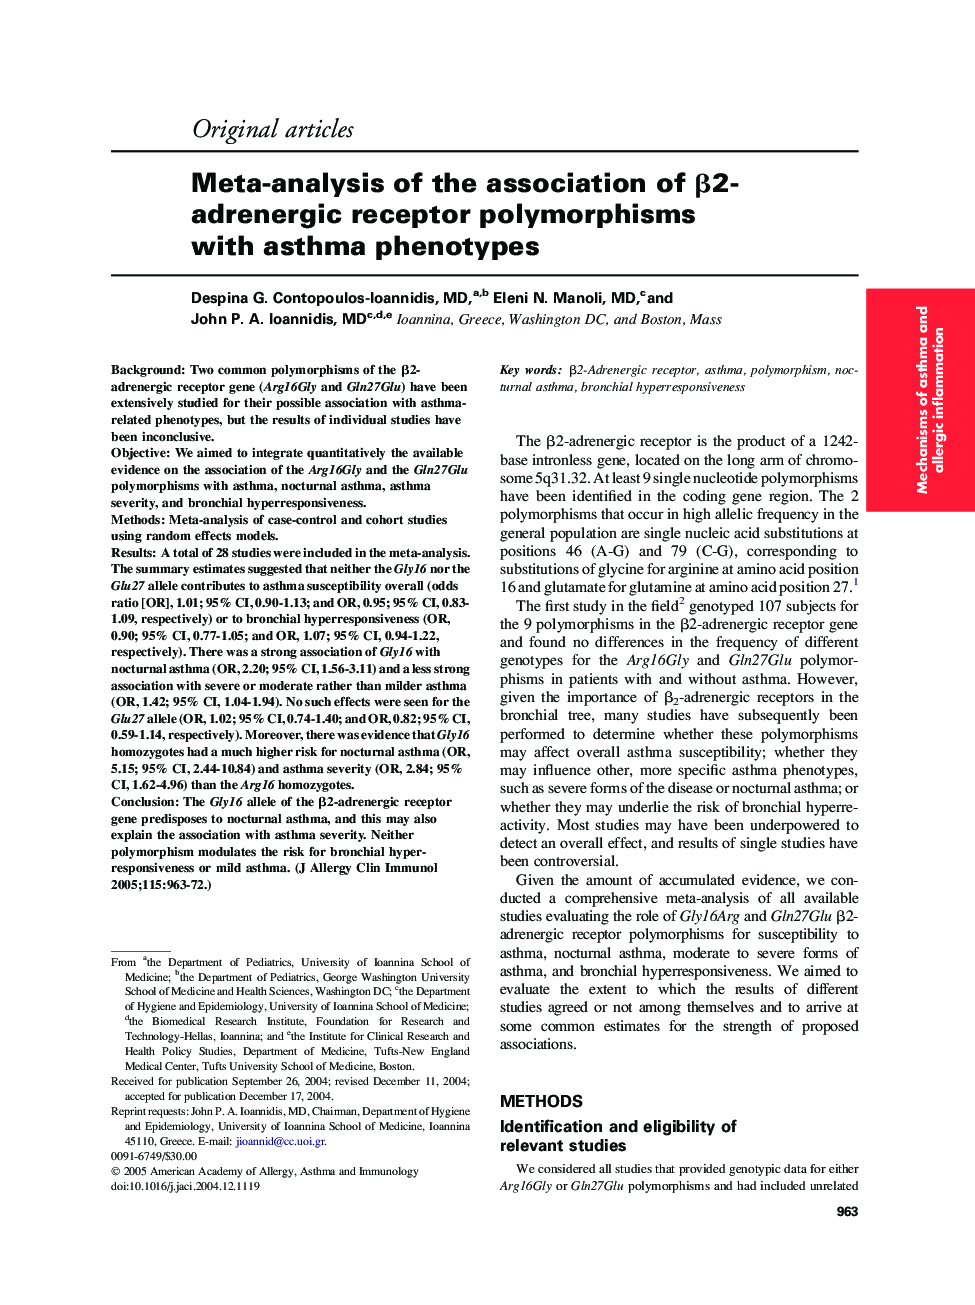 Meta-analysis of the association of Î²2-adrenergic receptor polymorphisms with asthma phenotypes